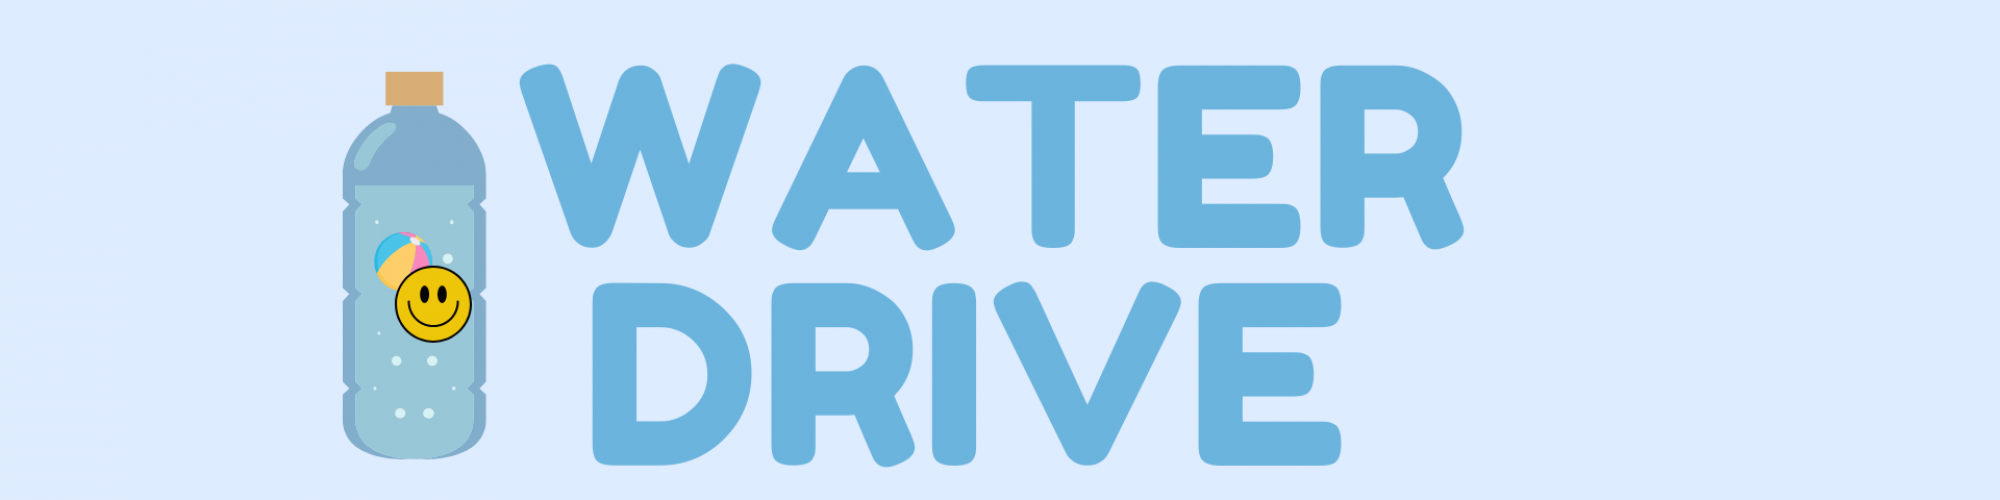 WATER DRIVE (2)